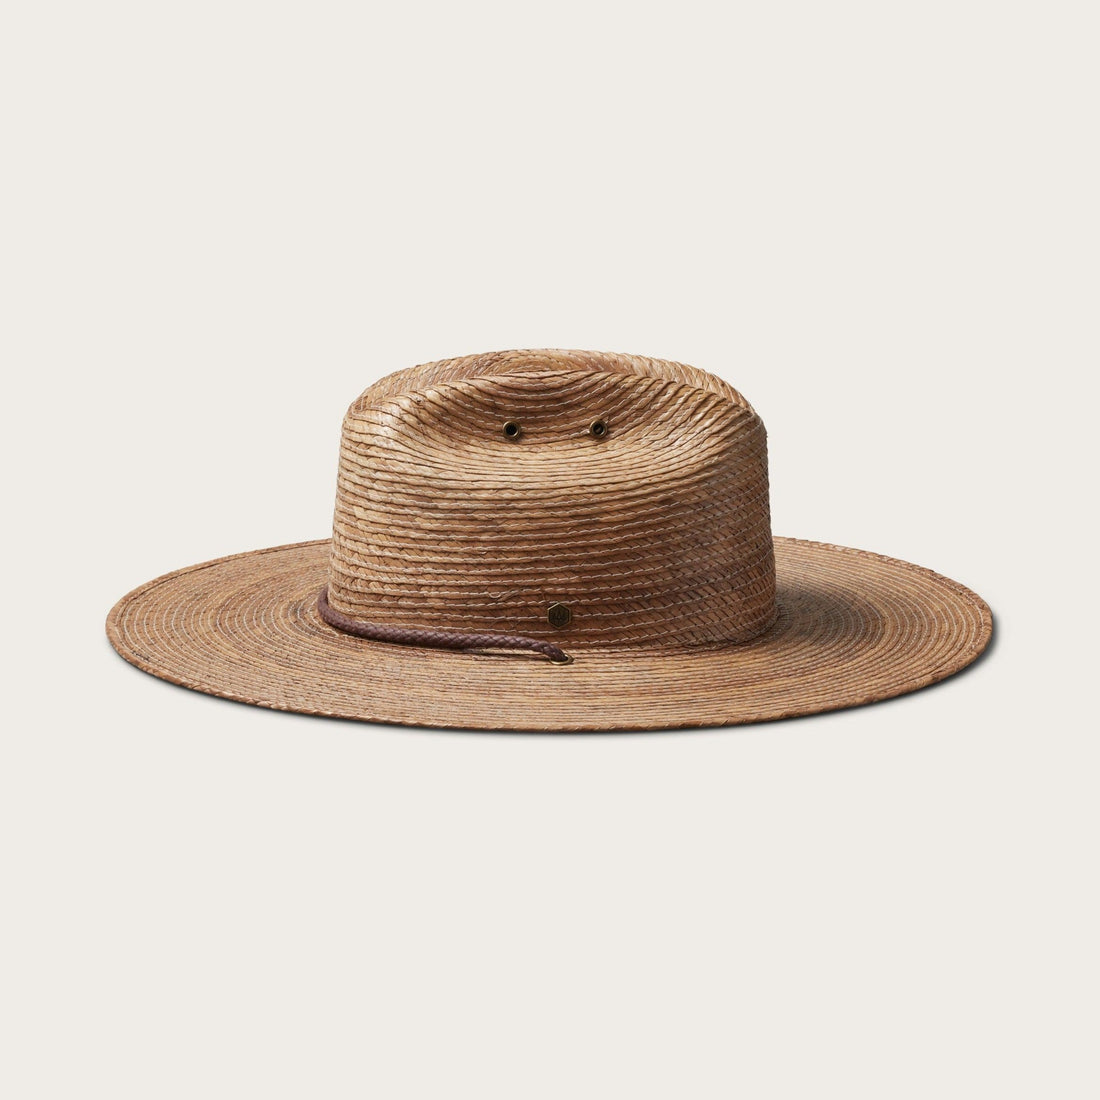 Sunny Days Style Classic Straw Fedora Hat